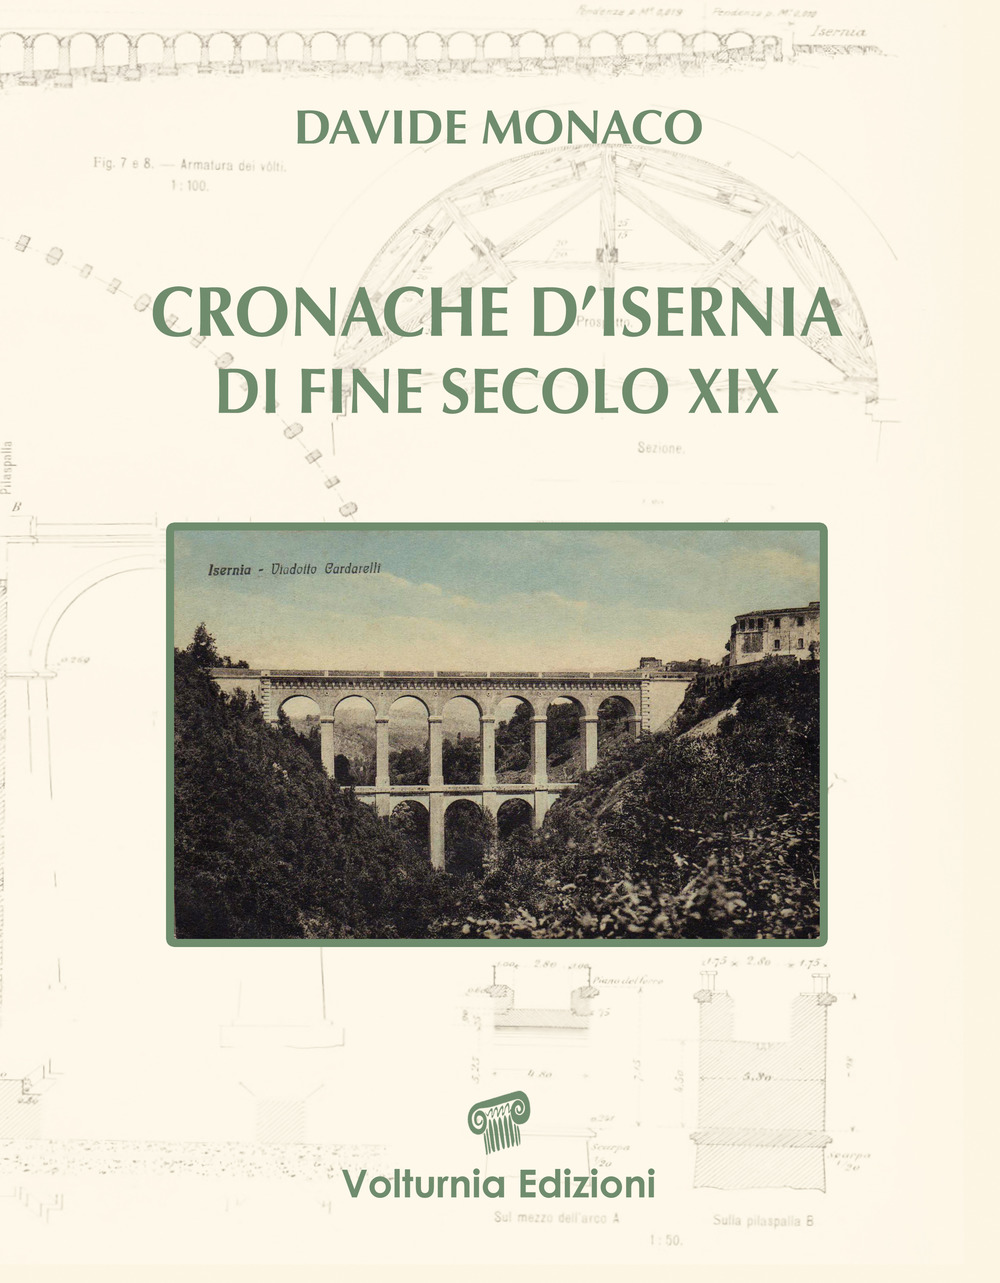 Cronache d'Isernia di fine secolo XIX (1885-1899)